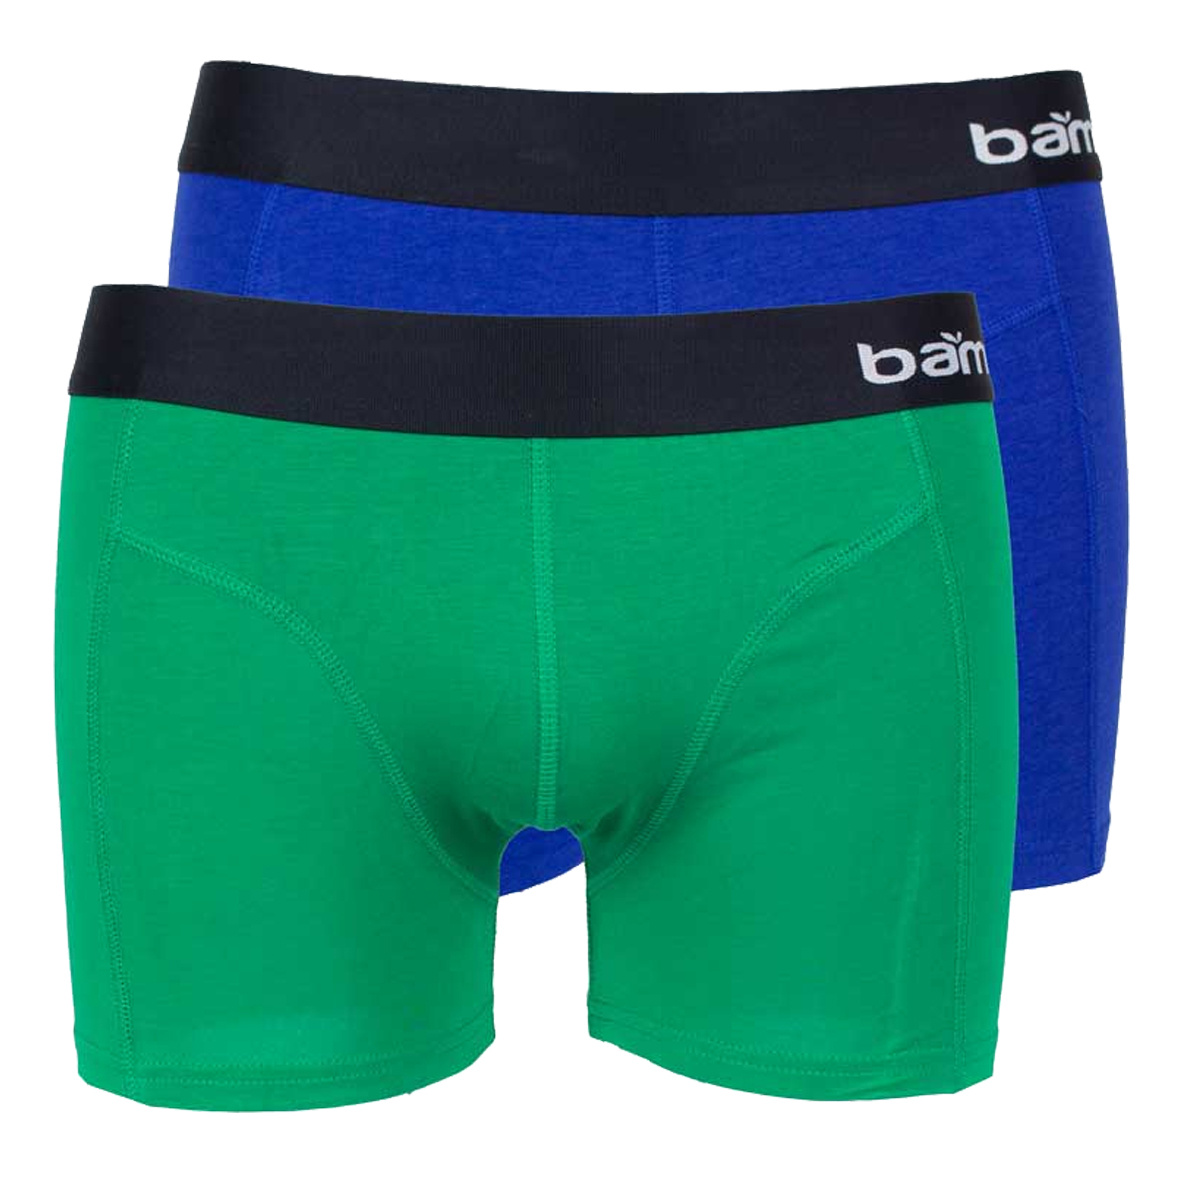 Apollo Bamboe Boxershort Heren Blauw Groen 2 Pack